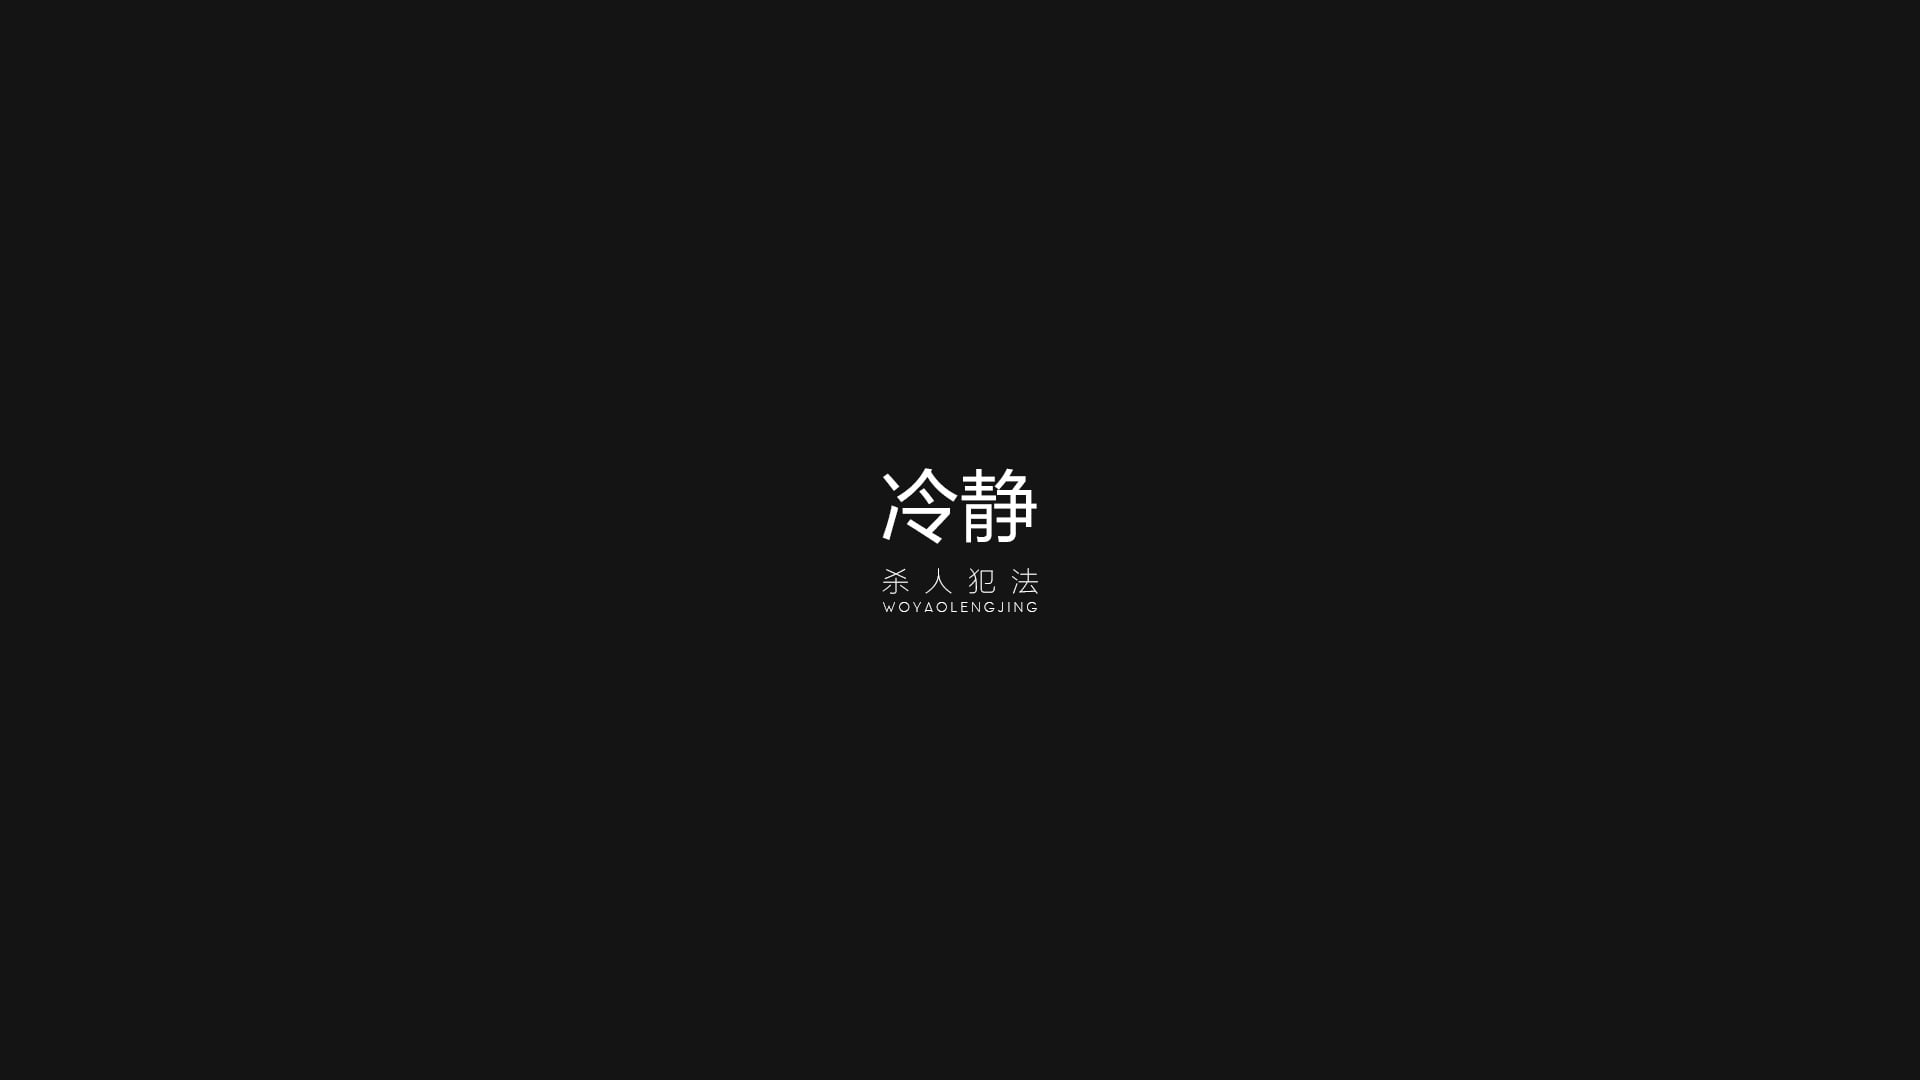 Free download | HD wallpaper: kanji text wallpaper, calm, typography ...